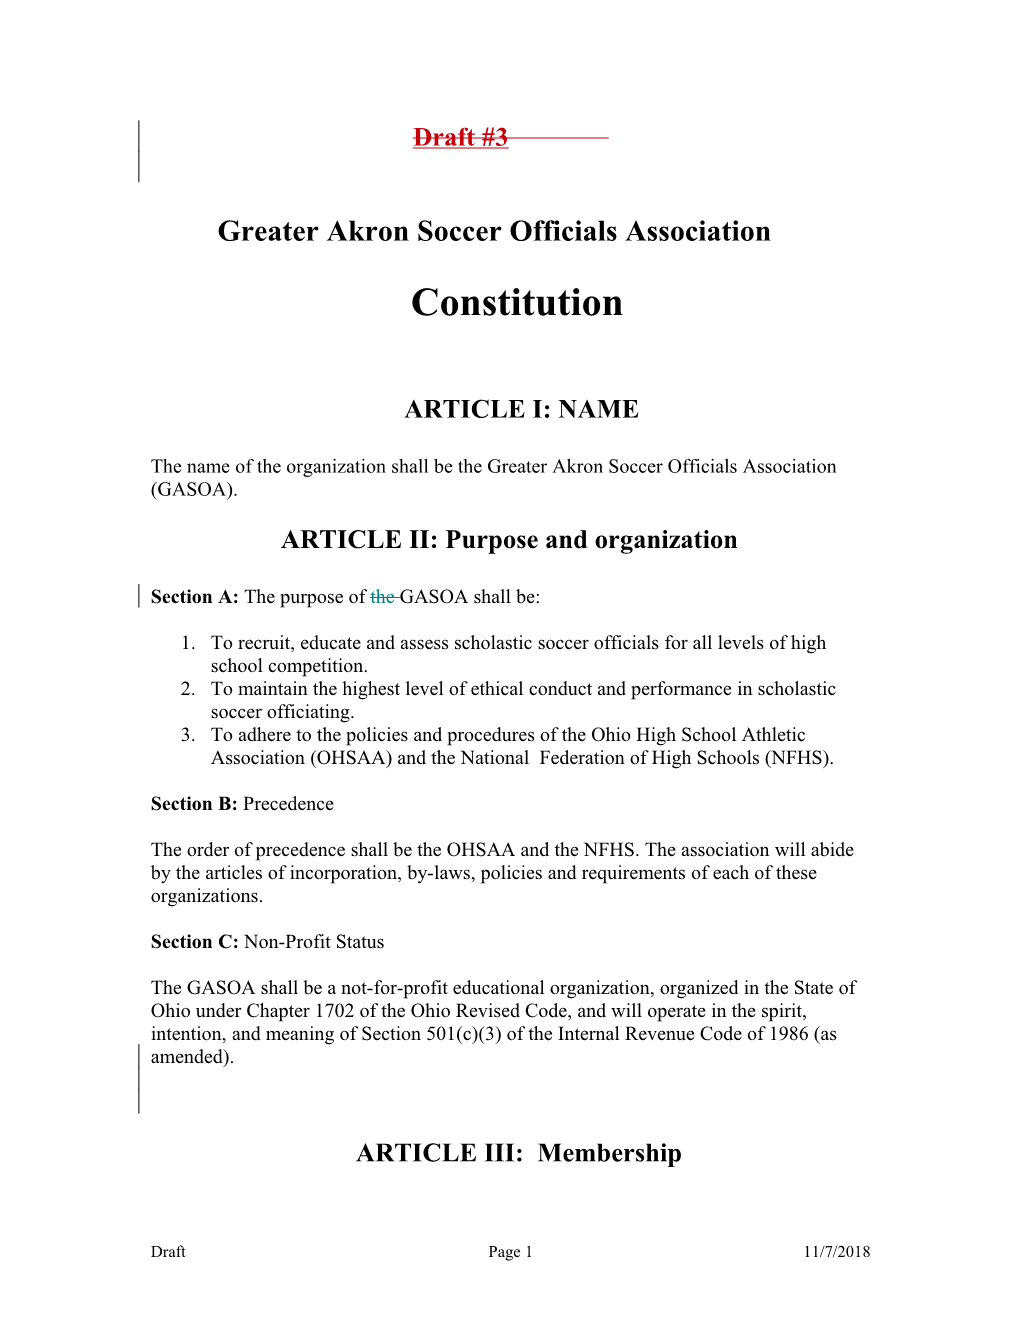 Greater Akron Soccer Officials Association